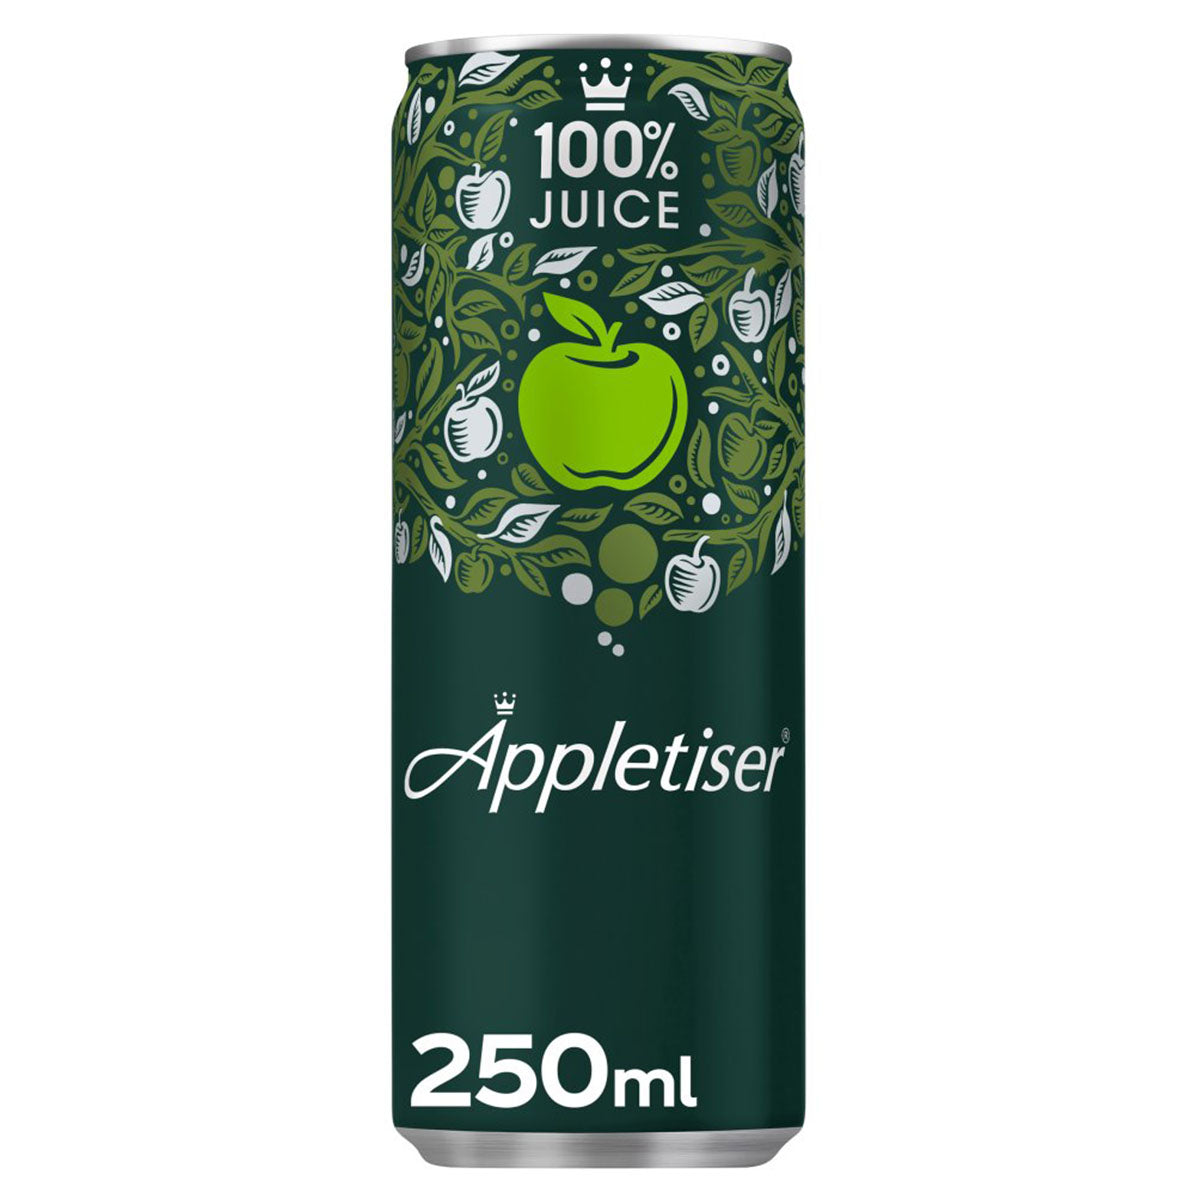 Appletiser - Sparkling Apple Juice - 250ml - Continental Food Store